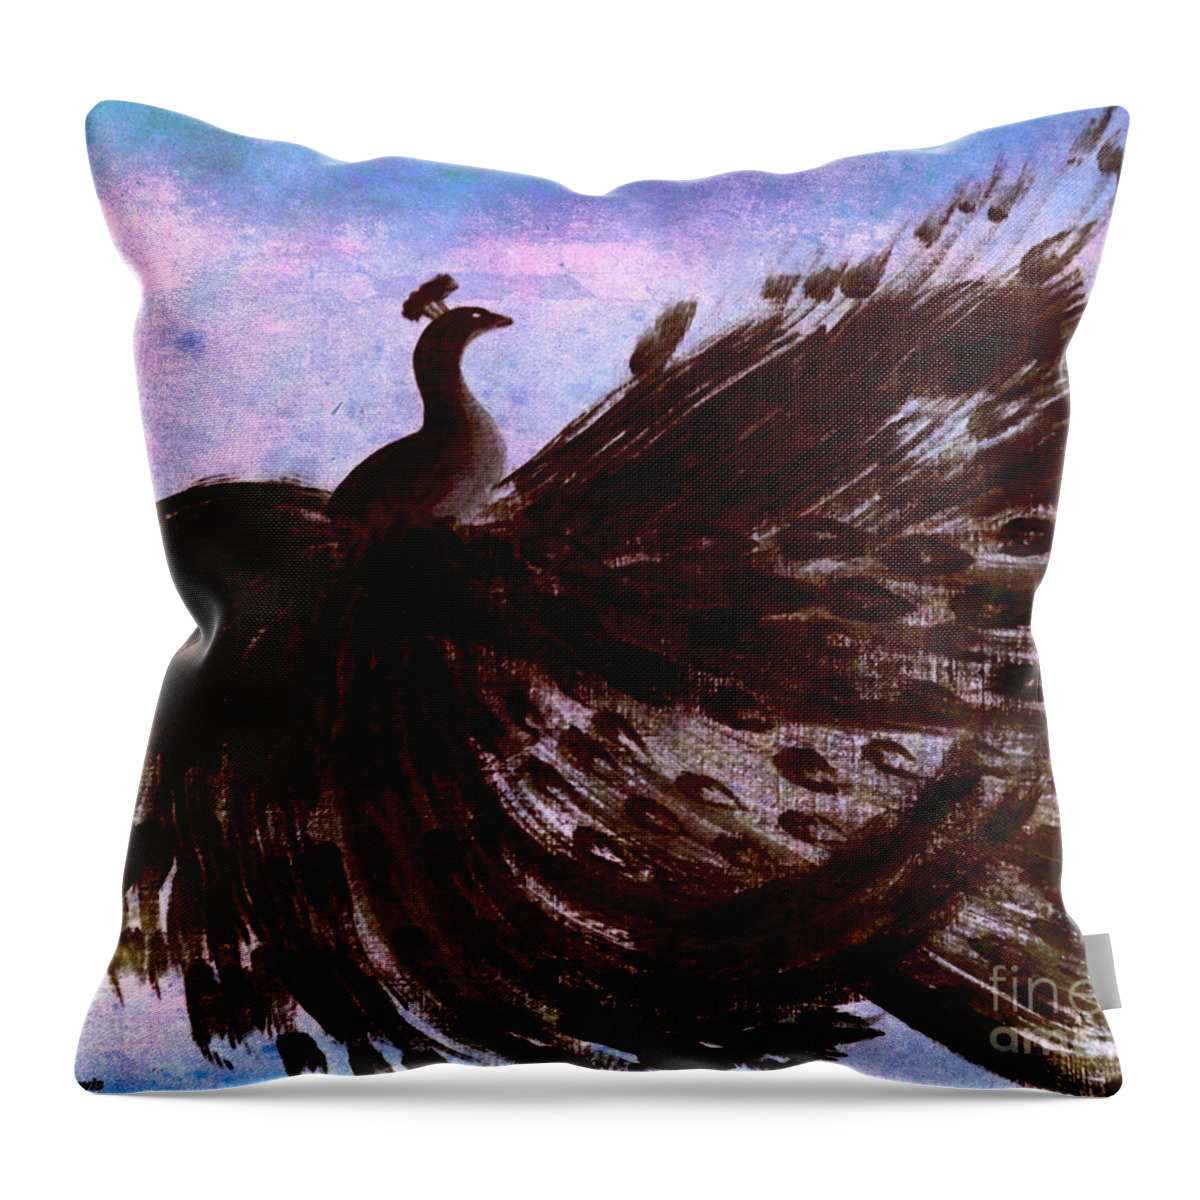 Black Bird Throw Pillow featuring the digital art DANCING PEACOCK blue pink wash by Anita Lewis